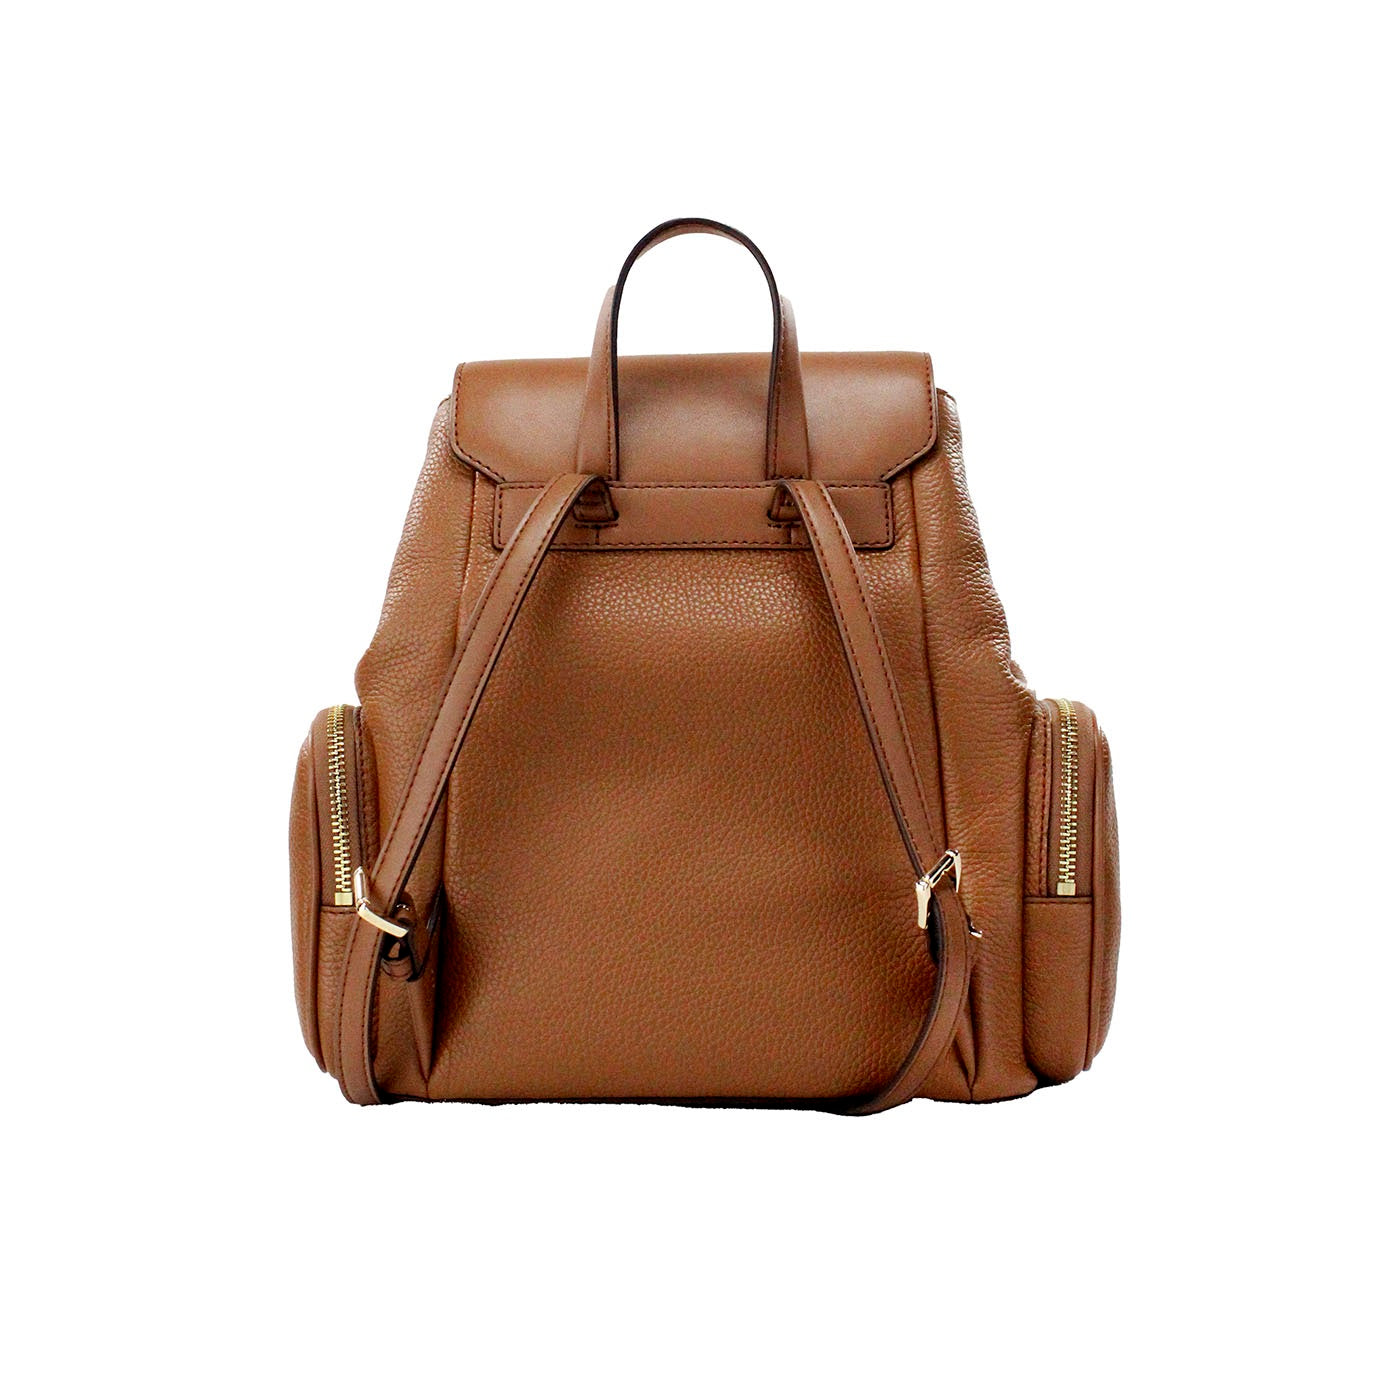 Fashionsarah.com Fashionsarah.com Michael Kors Jet Set Medium Luggage Leather Chain Shoulder Backpack Bag